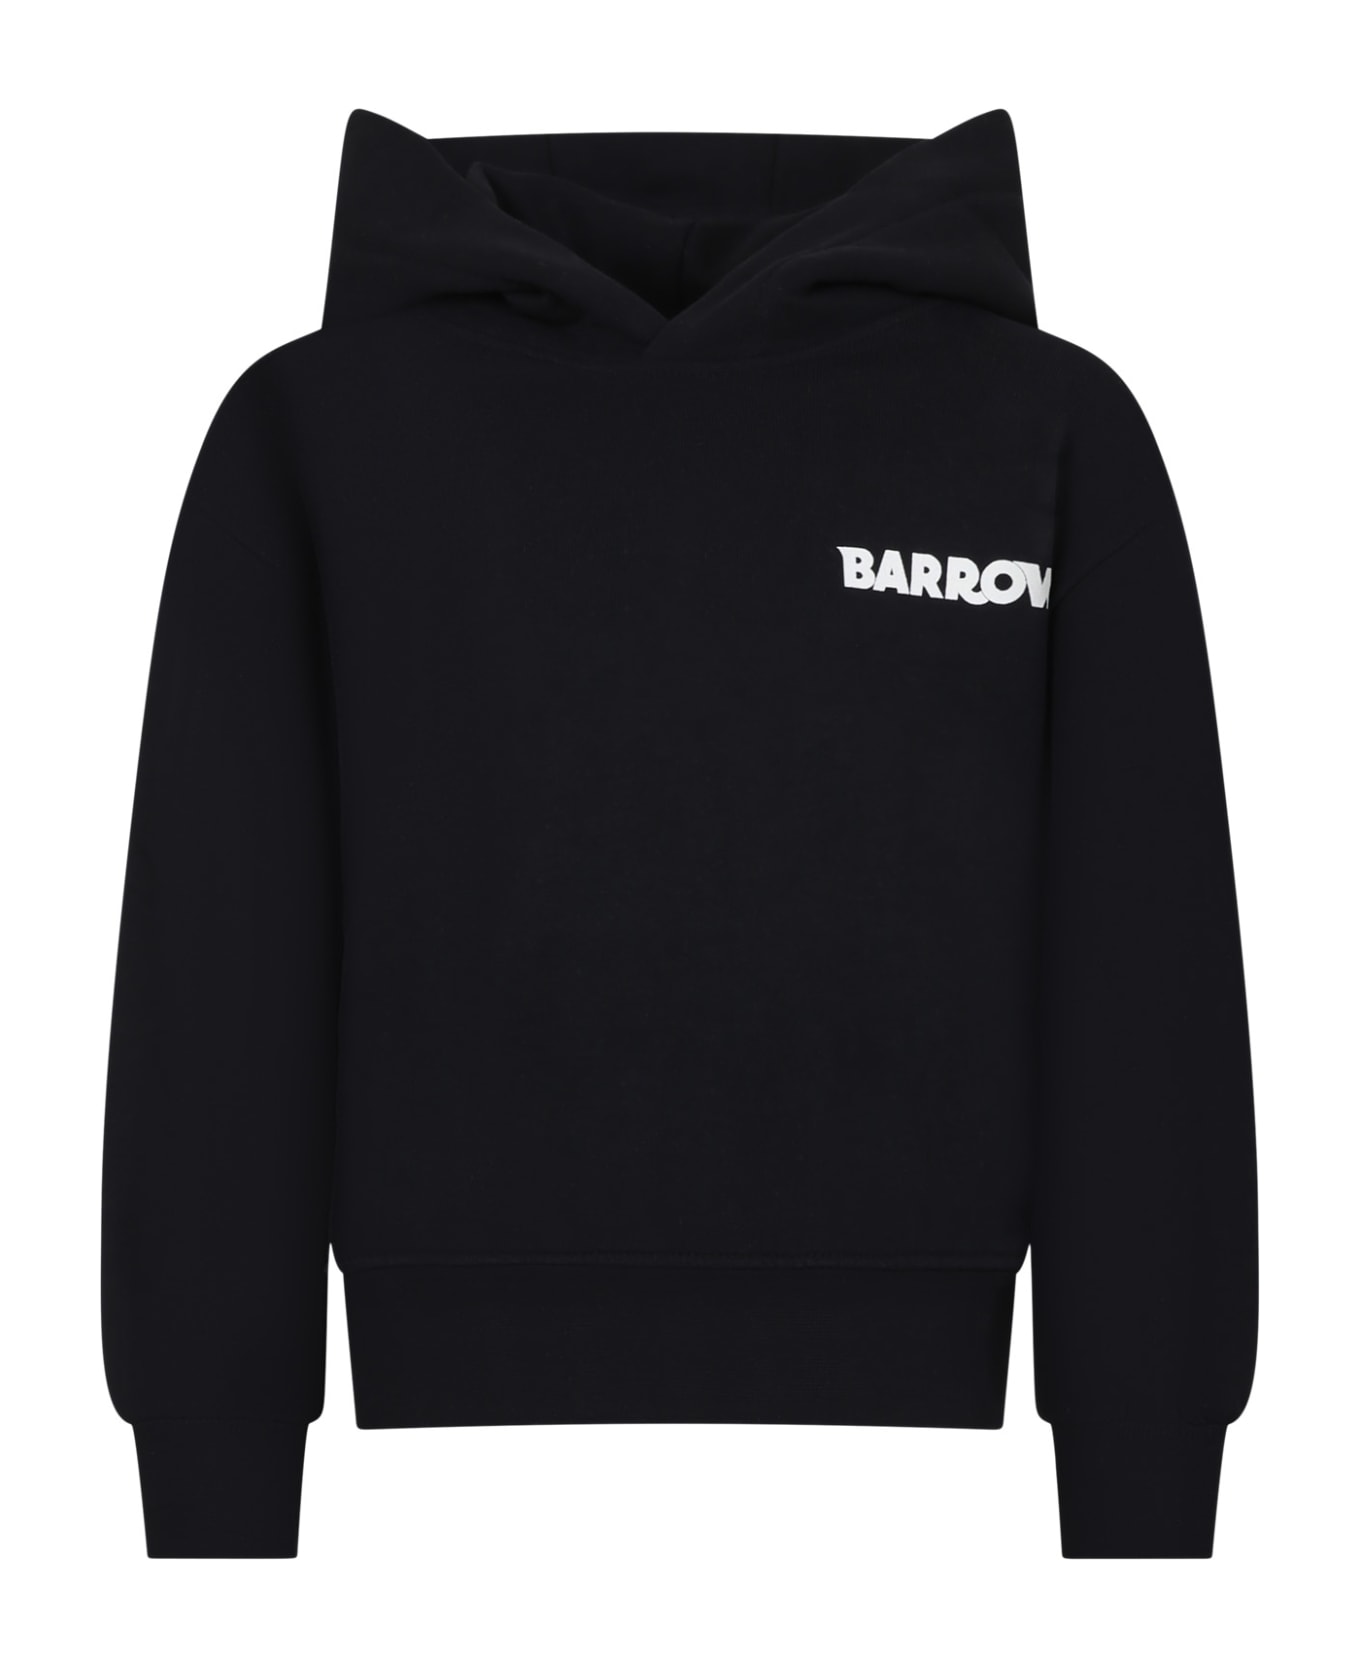 Barrow Black Sweatshirt For Kids With Logo And Iconic Smiley Face - Black ニットウェア＆スウェットシャツ